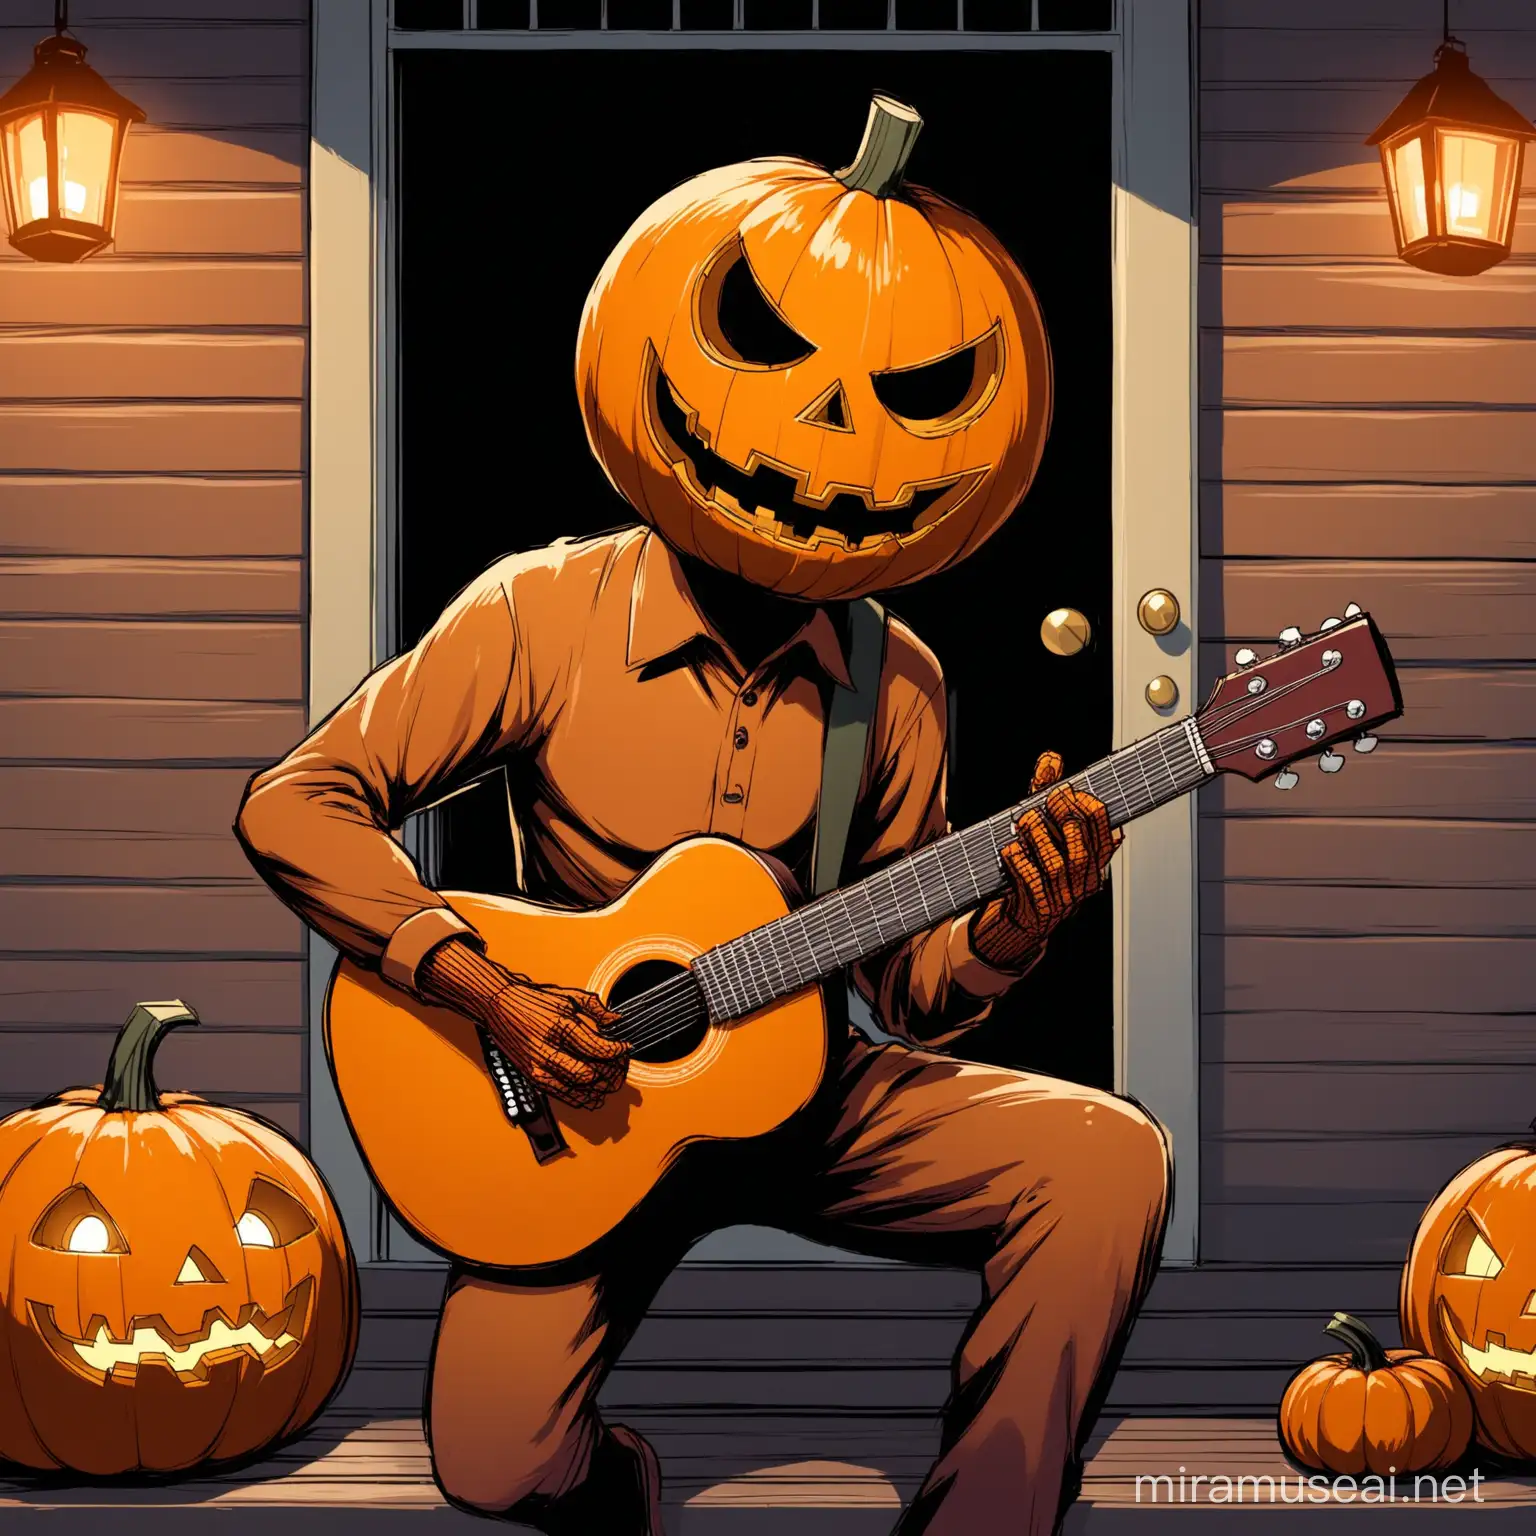 Cartoon Pumpkin Head Man Playing Guitar on Small Town Front Porch